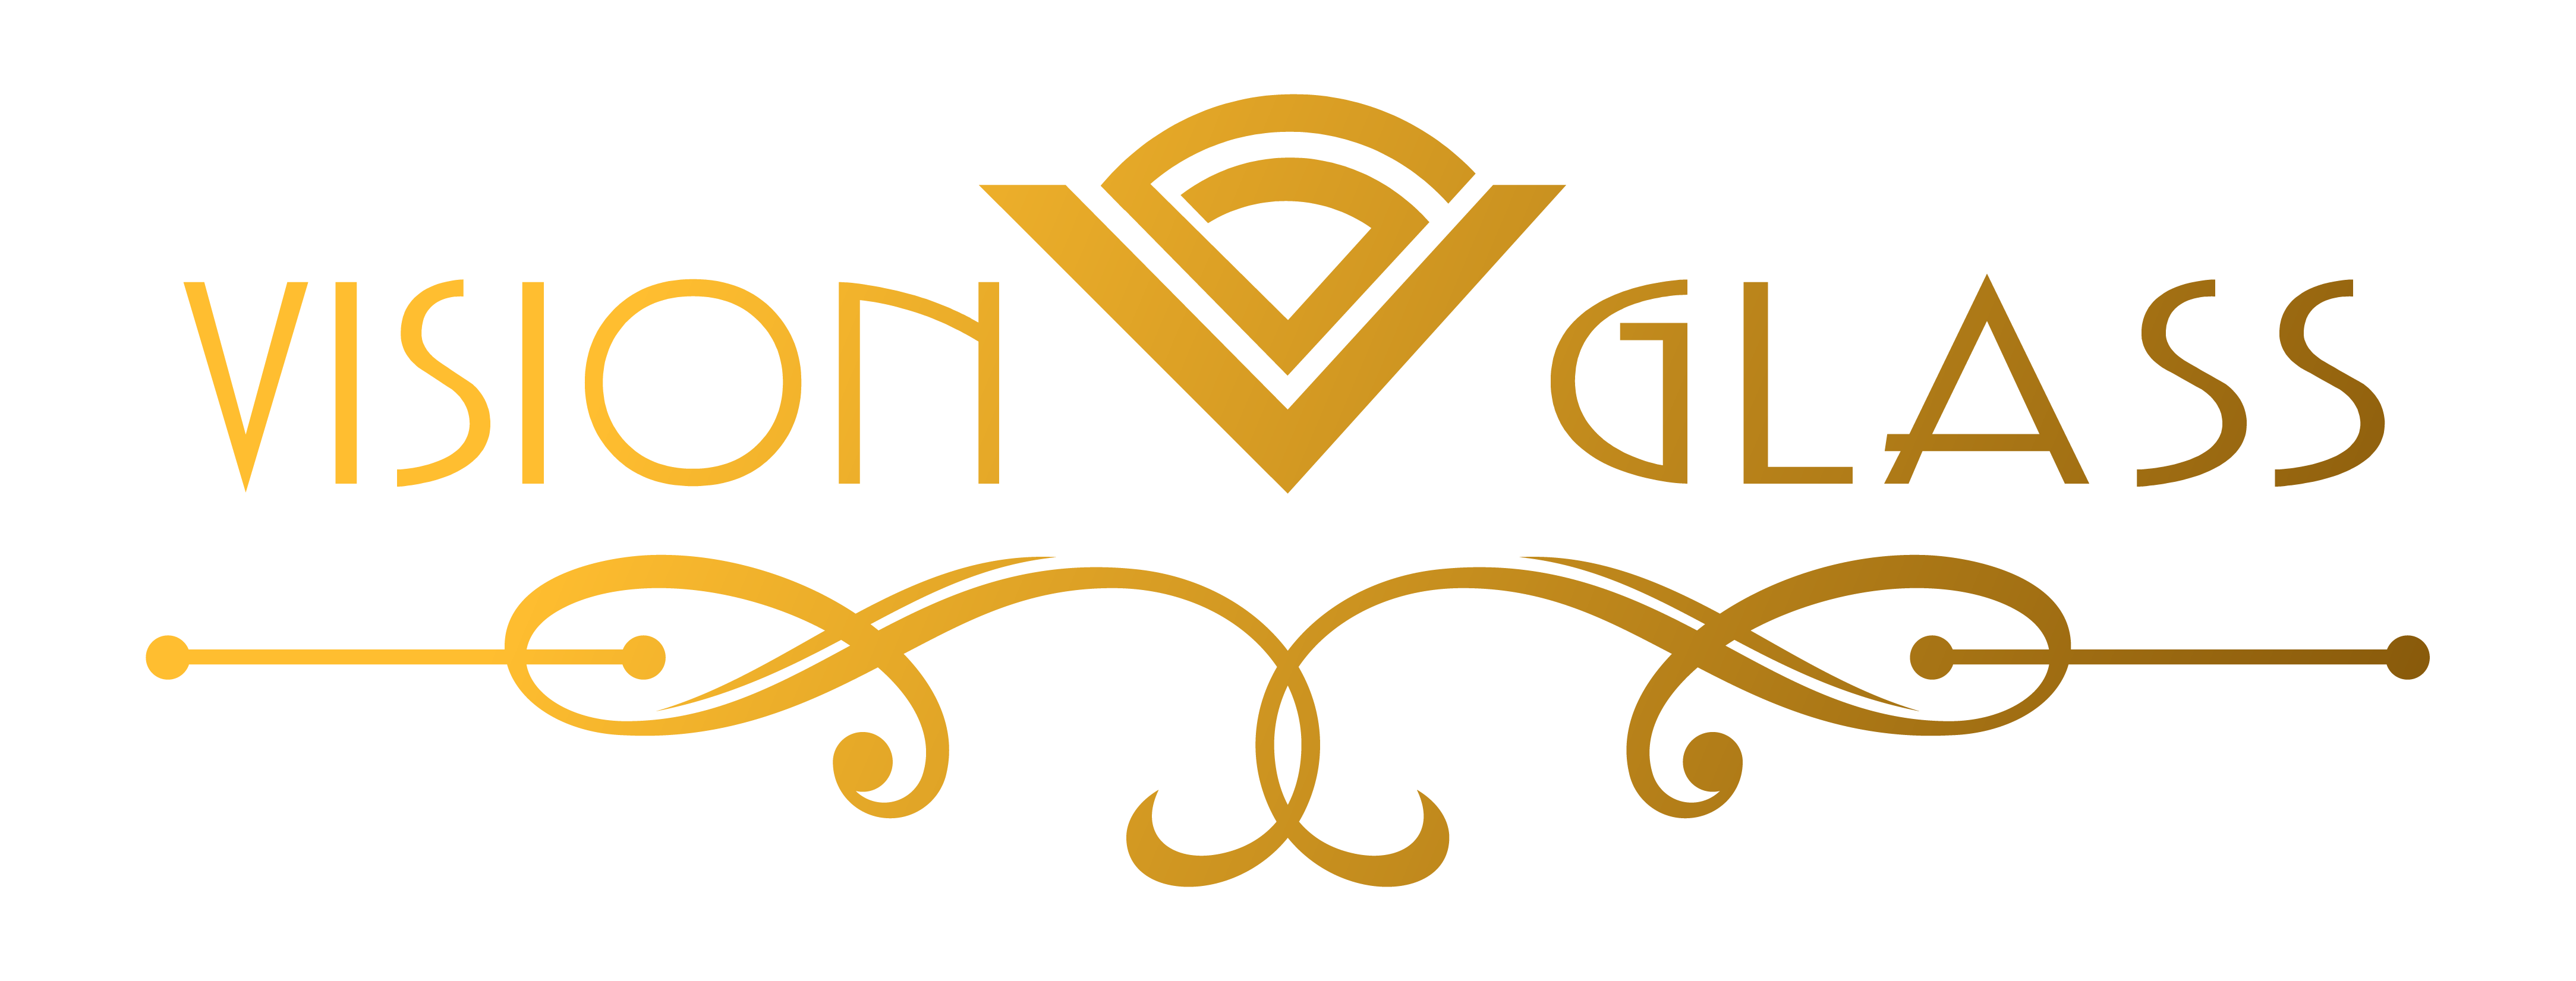 Logo Visionglass 2017 [Gradient]